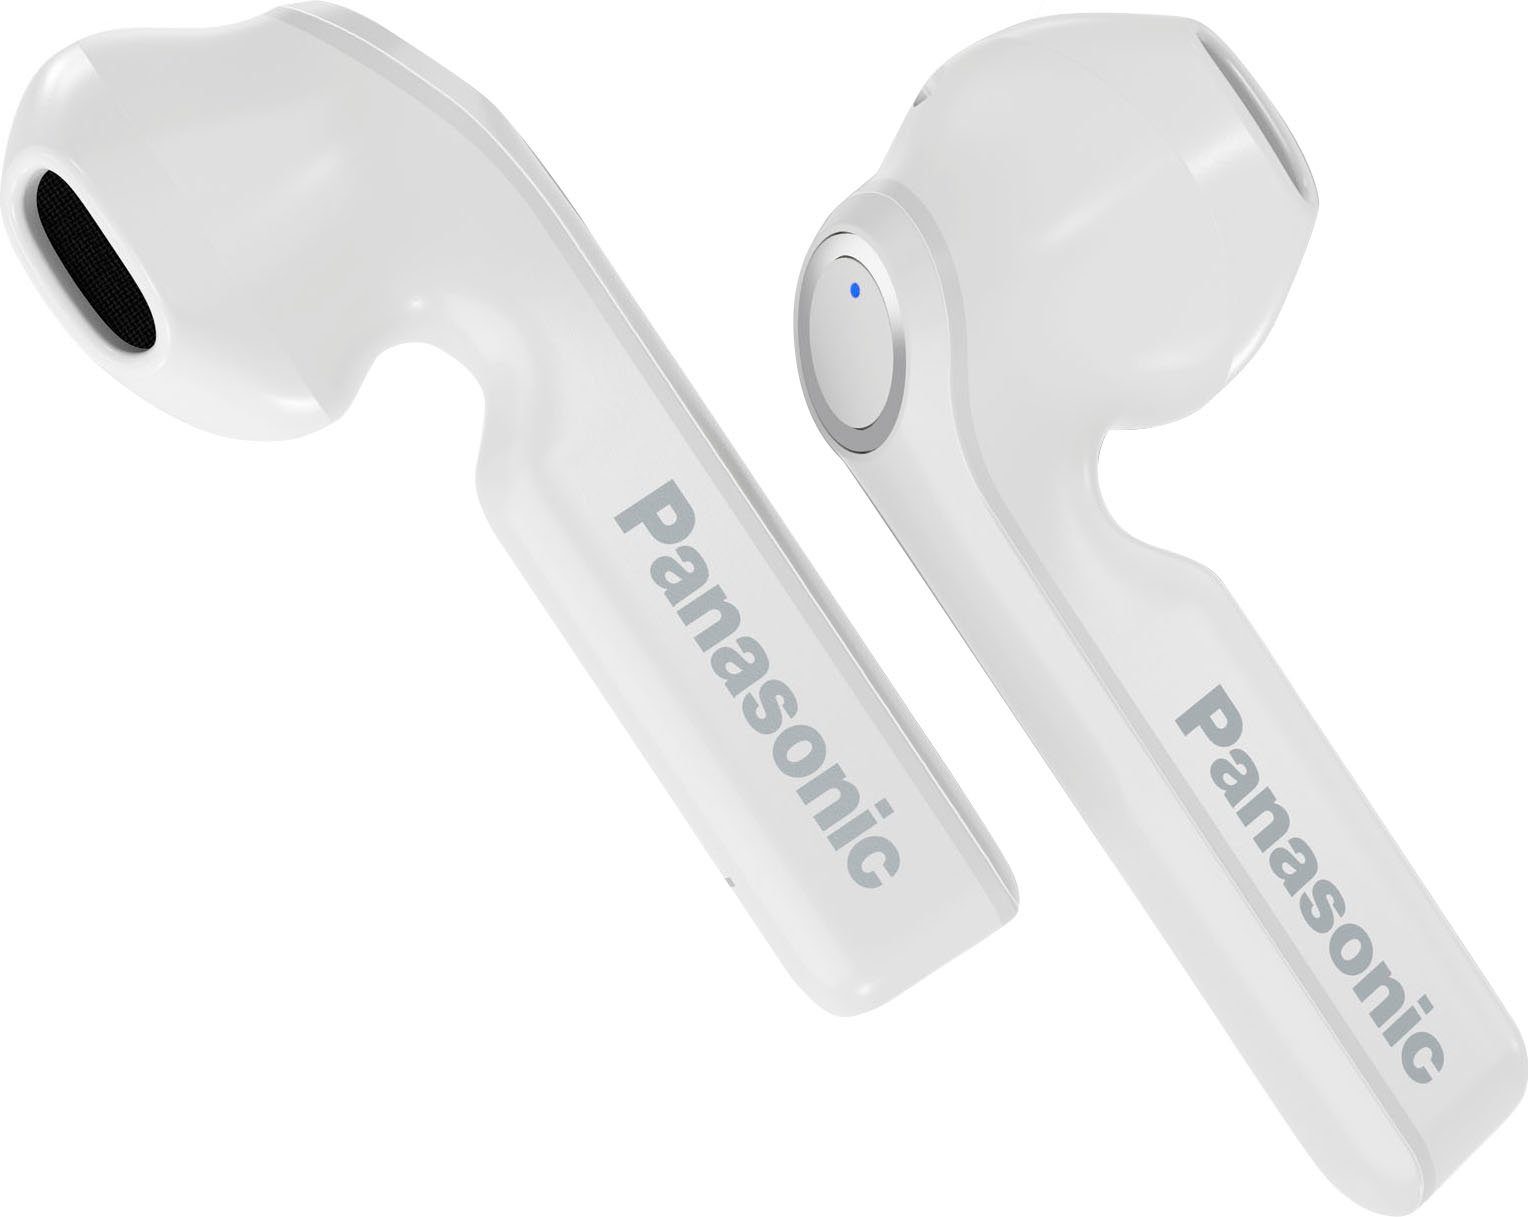 Panasonic RZ-B100 wireless In-Ear-Kopfhörer Bluetooth), 16h Wireless, insgesamt Lade-Case Bietet Kompaktes (Earbuds True (Sprachsteuerung, Akkulaufzeit – 4h)